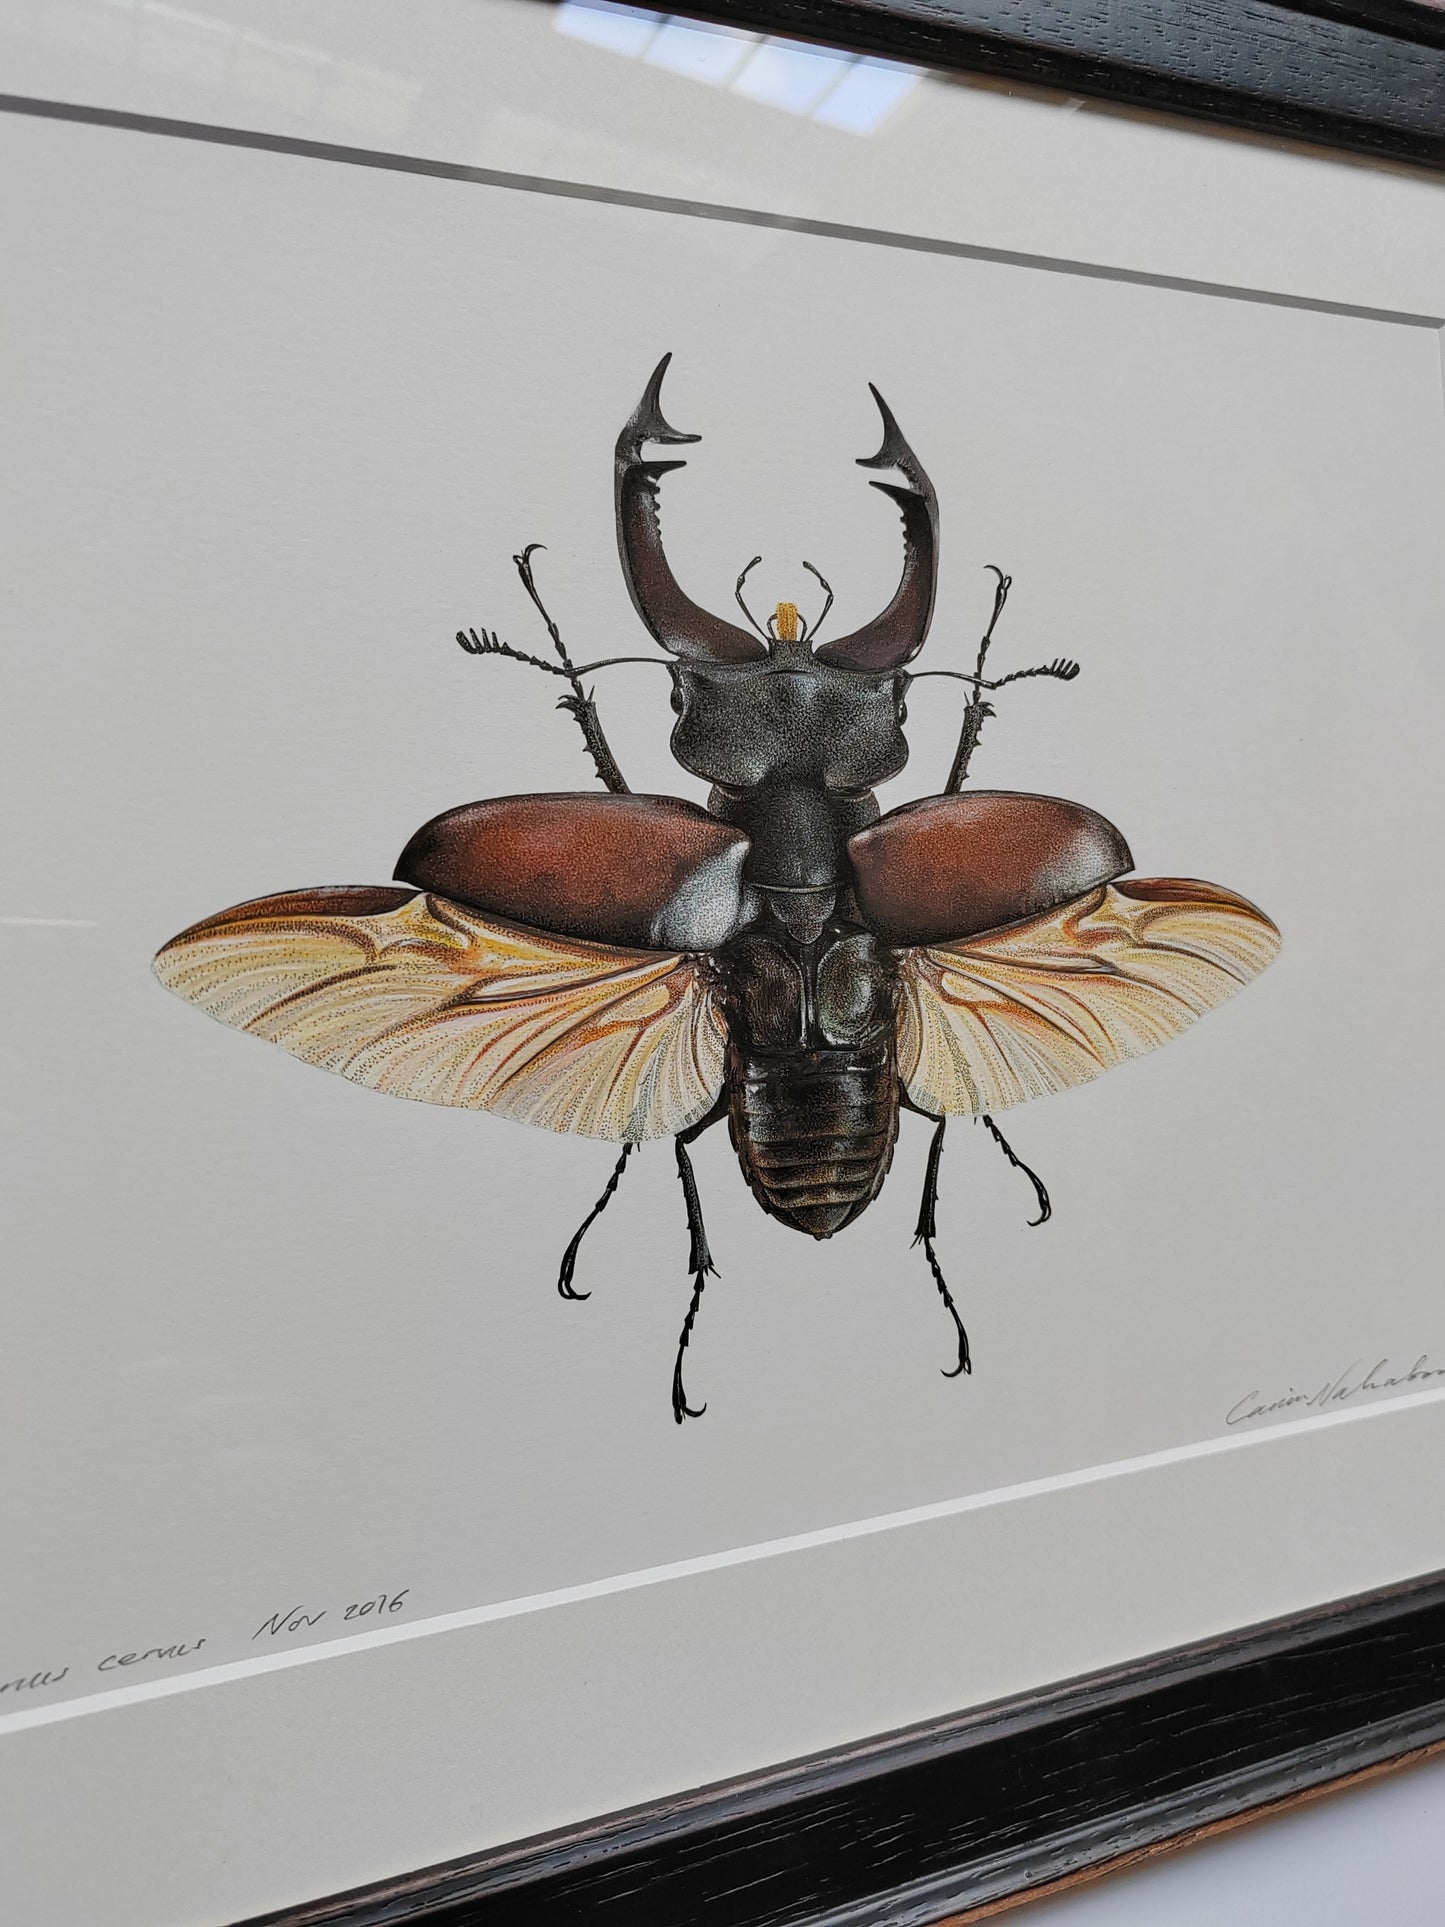 Framed Original Artwork - Lucanus cervus, European Stag Beetle